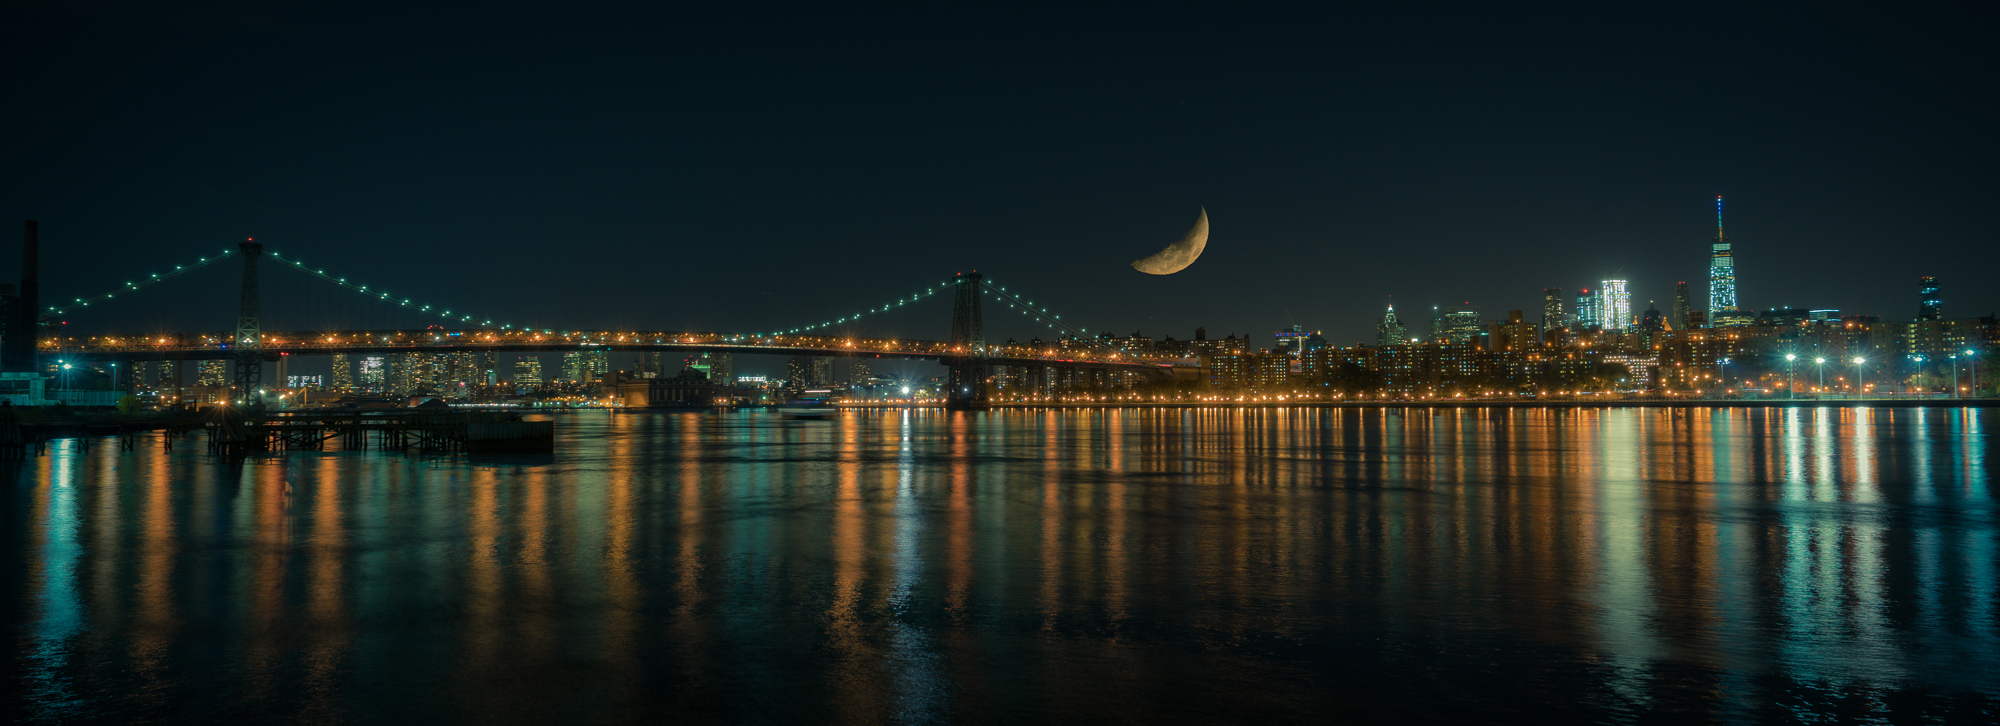 Super Moon, Brooklyn, New York City..
.